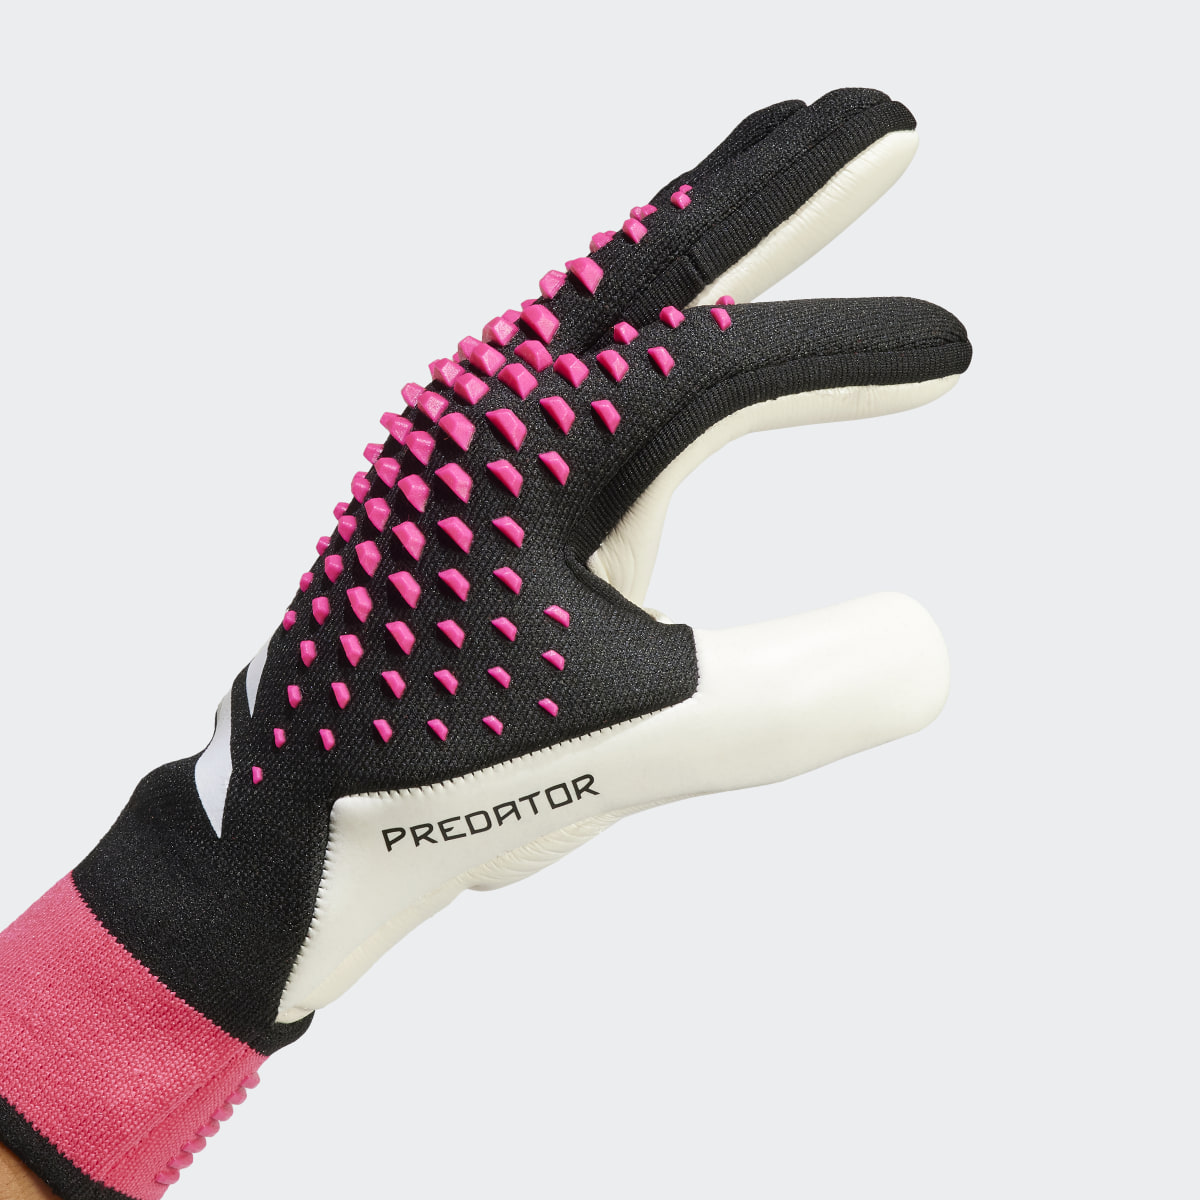 Adidas Predator Pro Promo Goalkeeper Gloves. 5